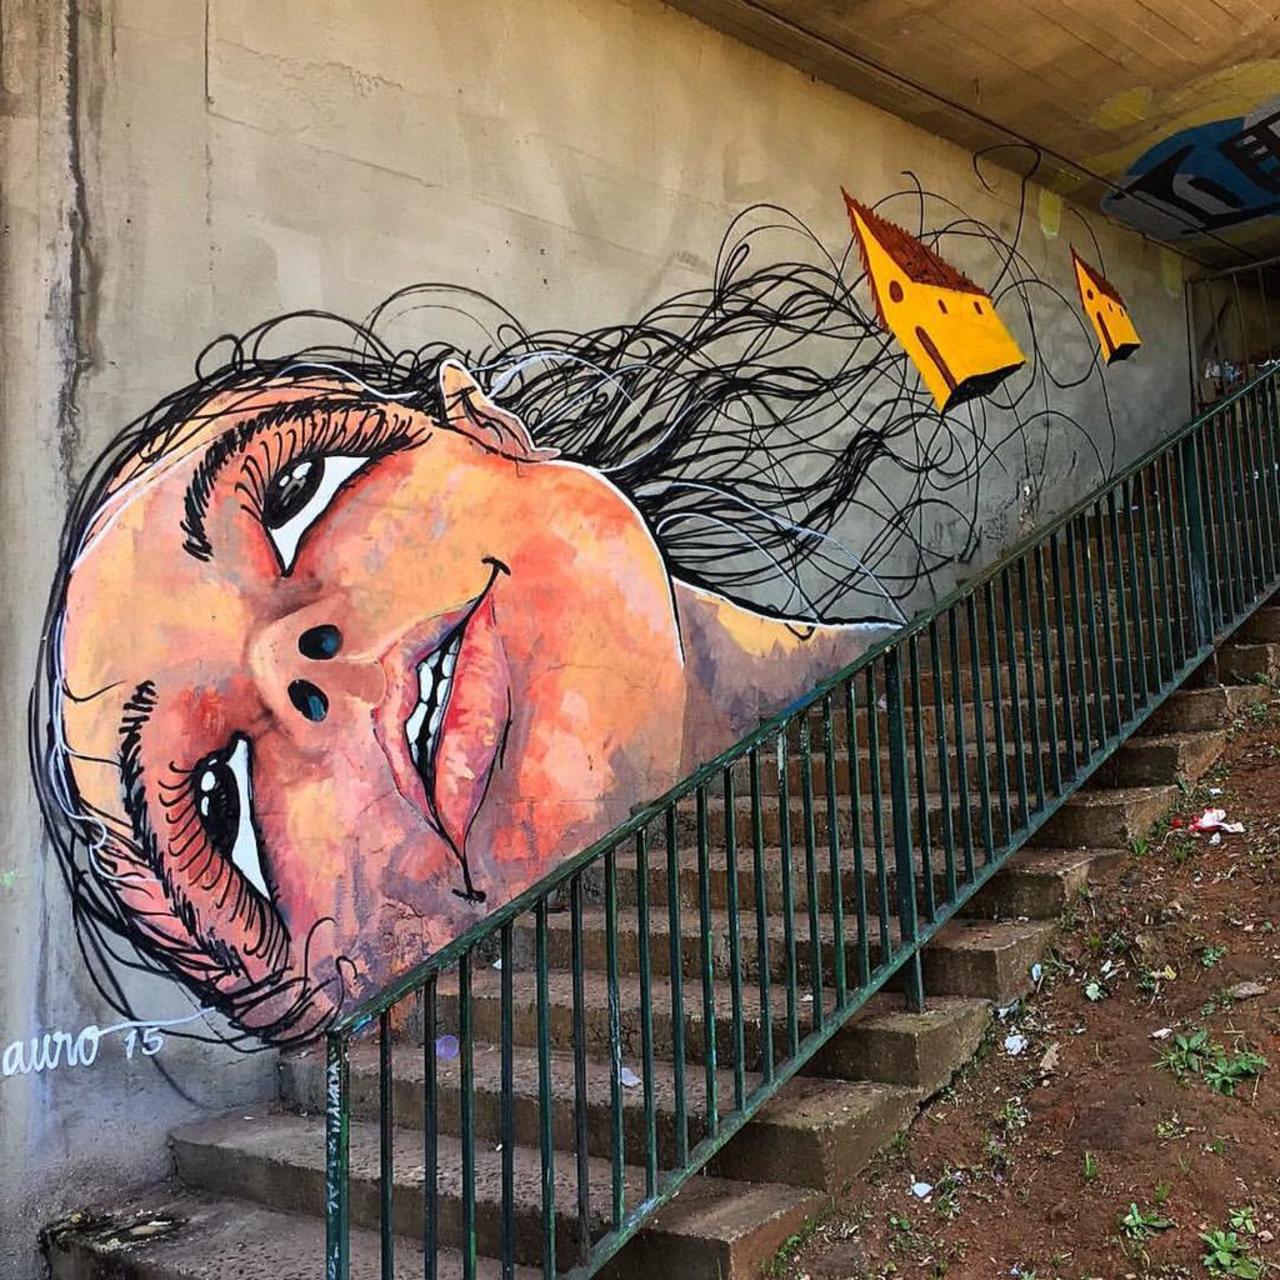 Street Art by Reveracidade in São Paulo 

#art #graffiti #mural #streetart http://t.co/iY6OYOC8p3